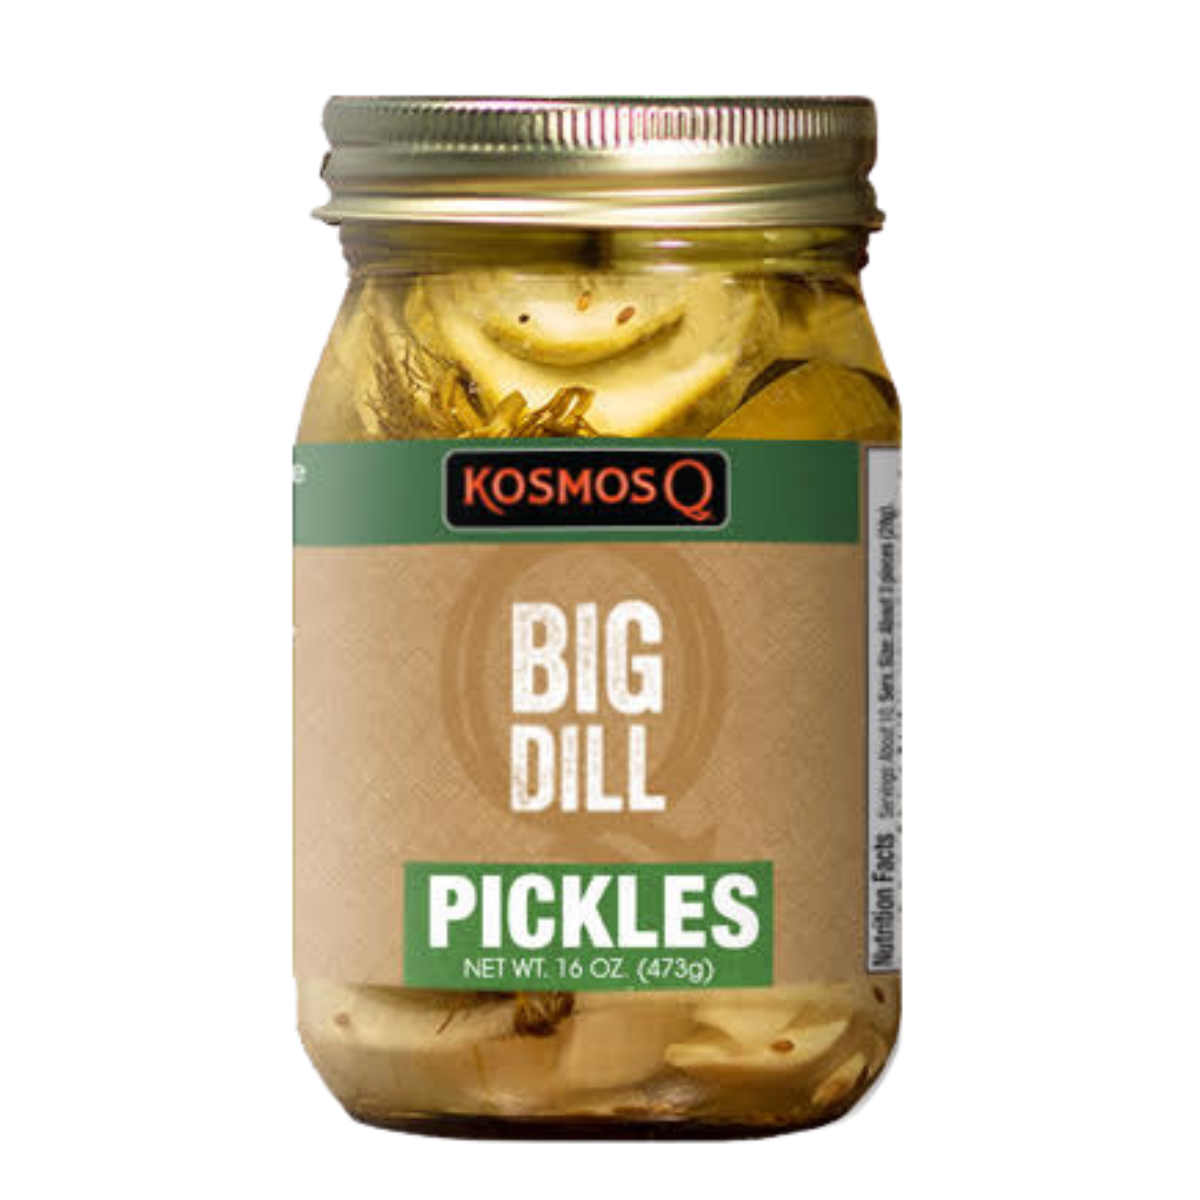 Kosmos Q BBQ Products & Supplies Big Dill Pickles